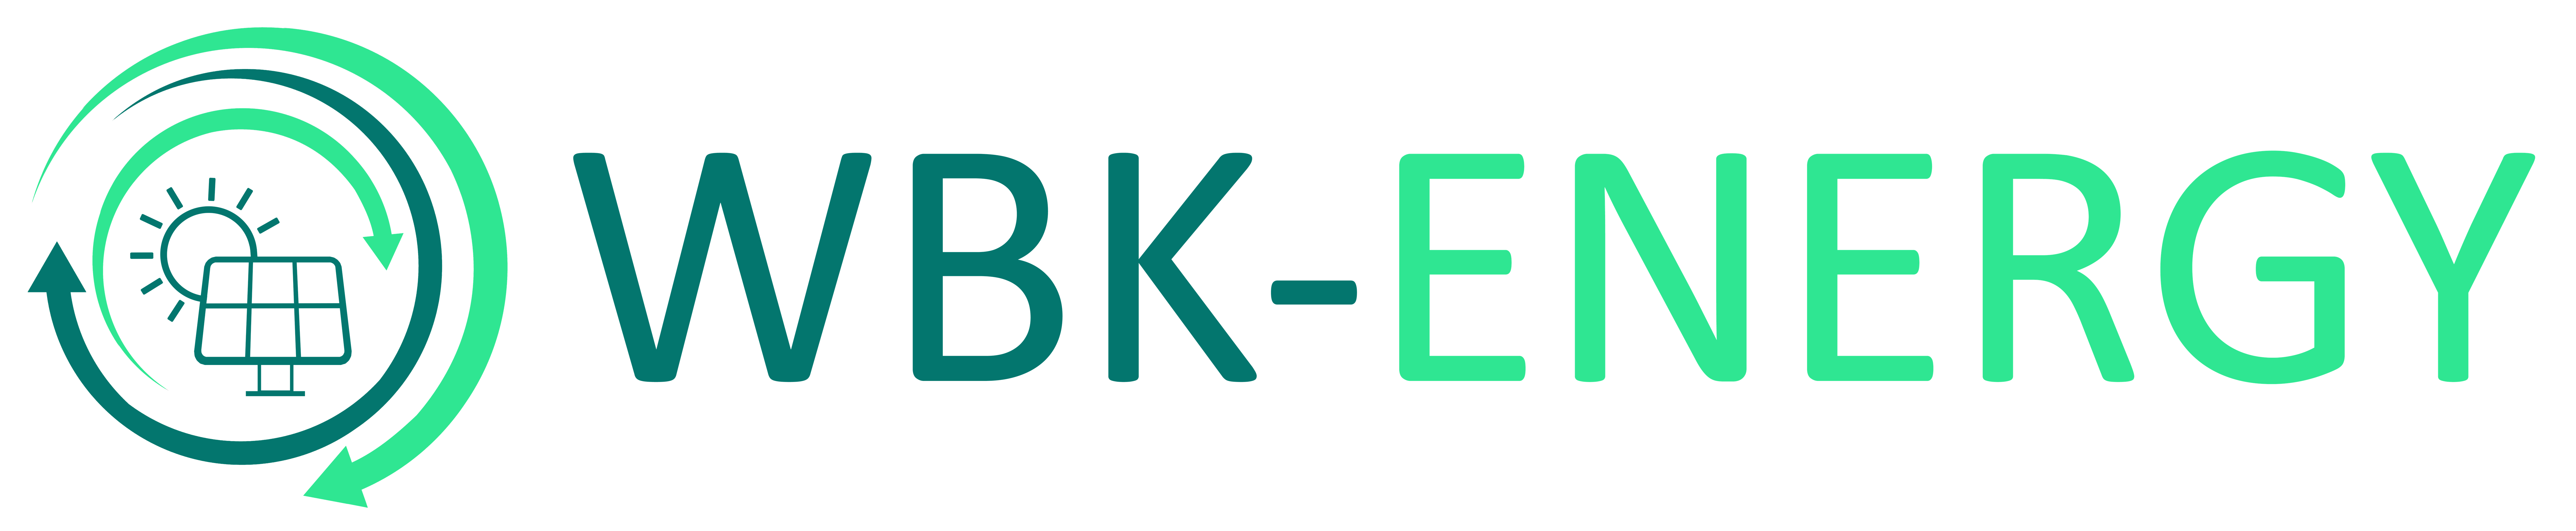 WBK Energy Logo